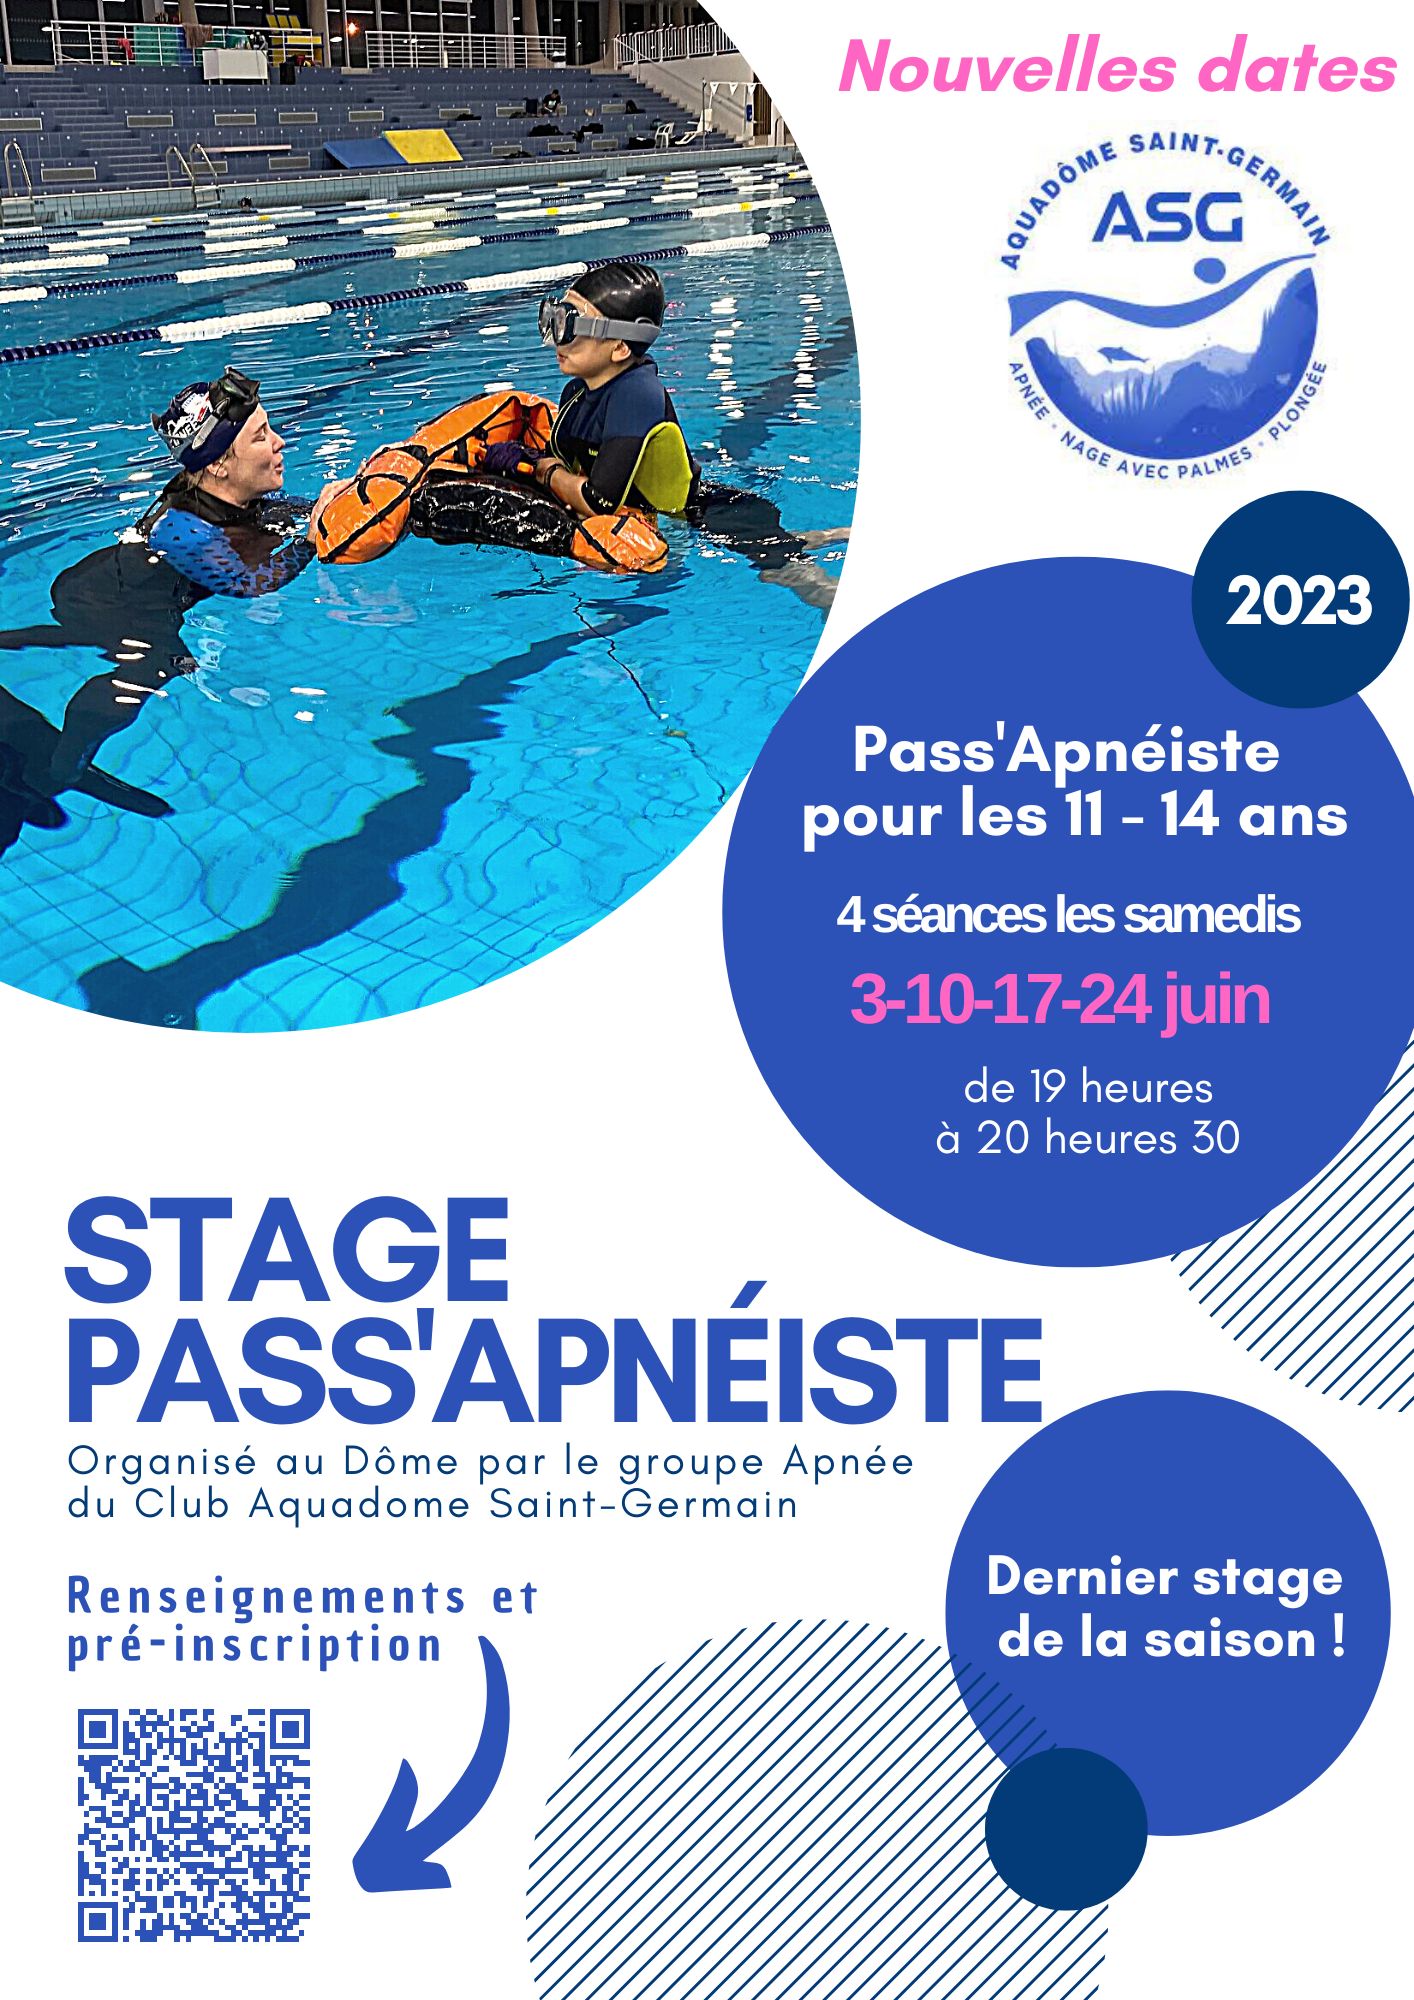 Poster 03 Stage Pass Apneiste mars avril 2023